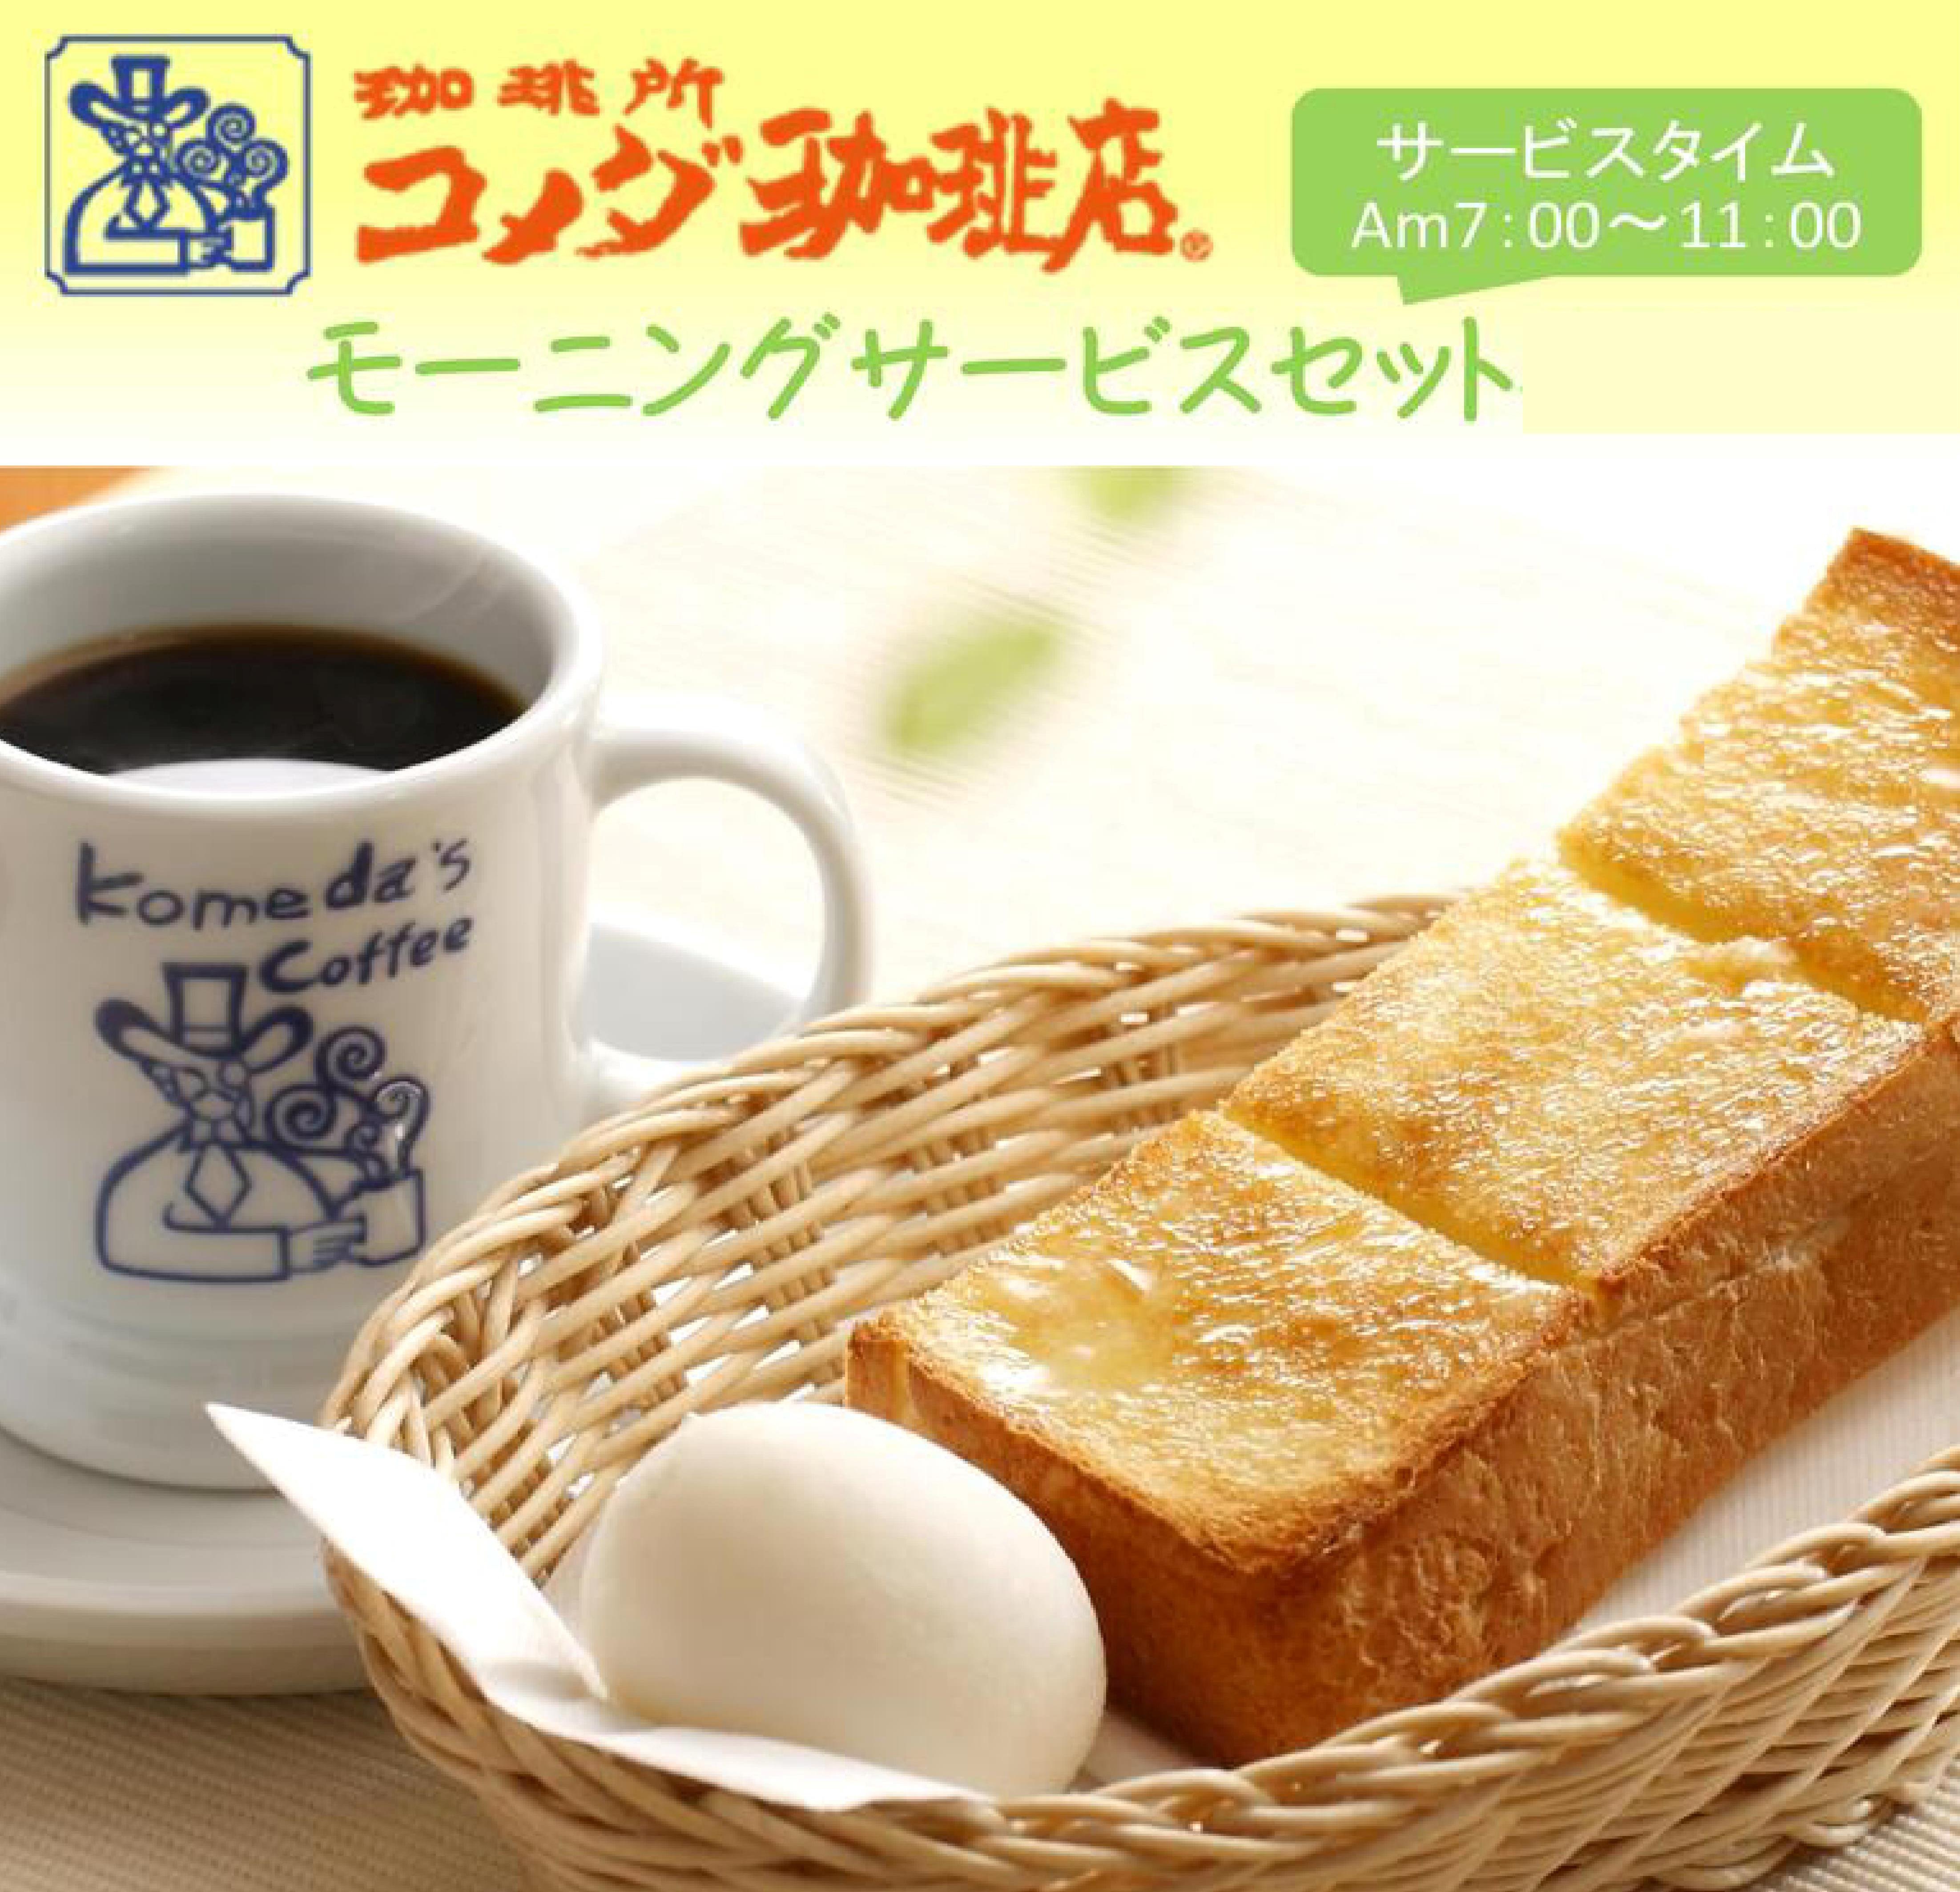 Komeda Coffee Shop บริการช่วงเช้า